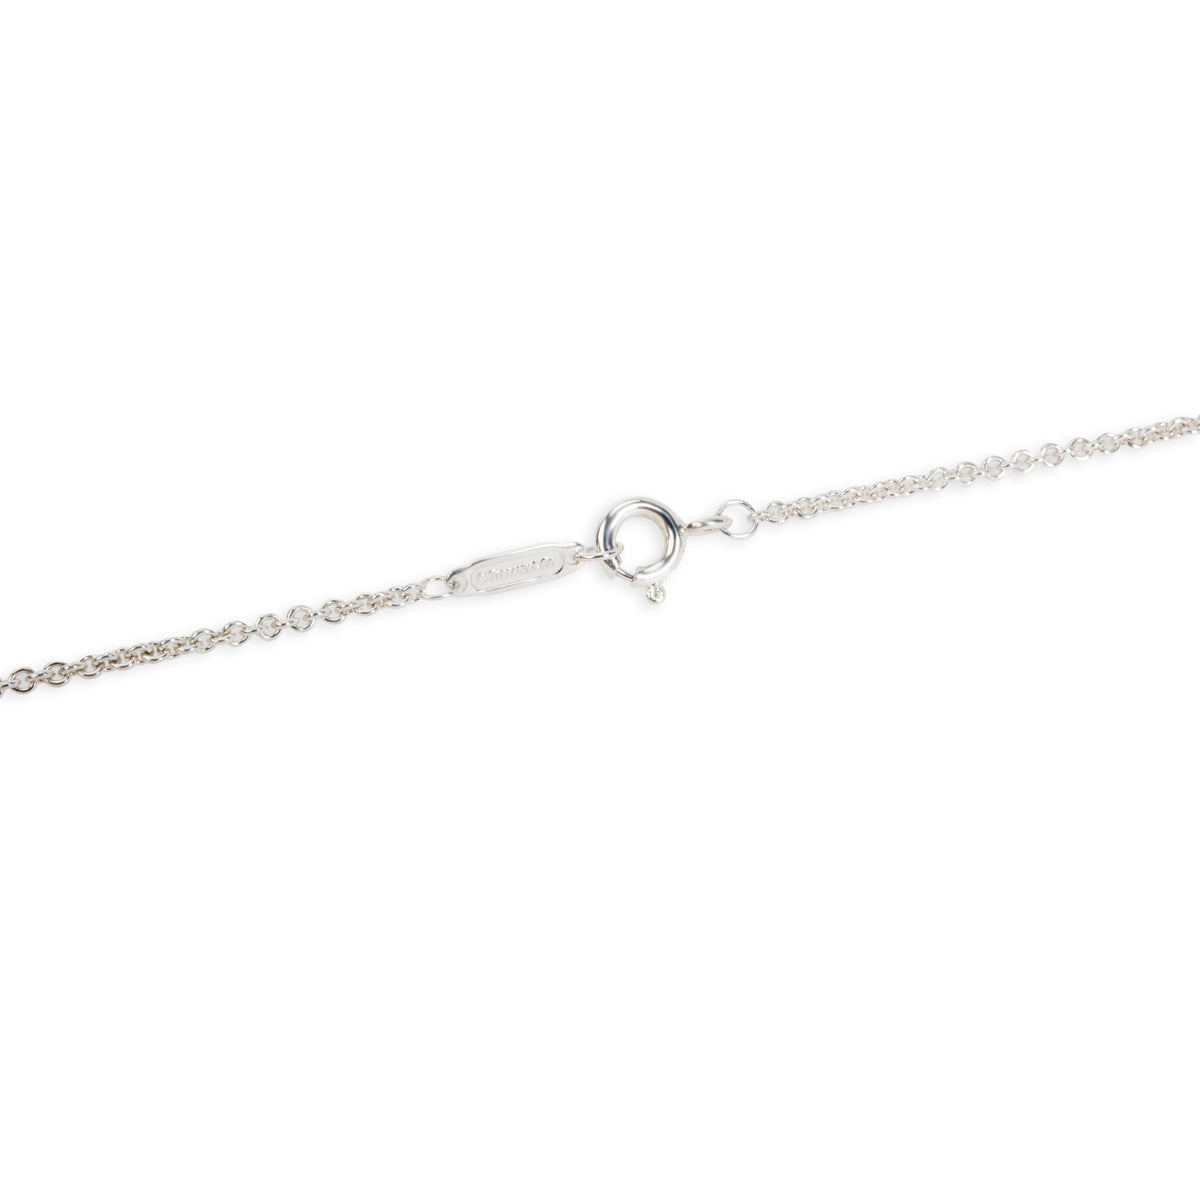 Tiffany & Co. Heart Drop Diamond Necklace in  Sterling Silver 0.05 CTW